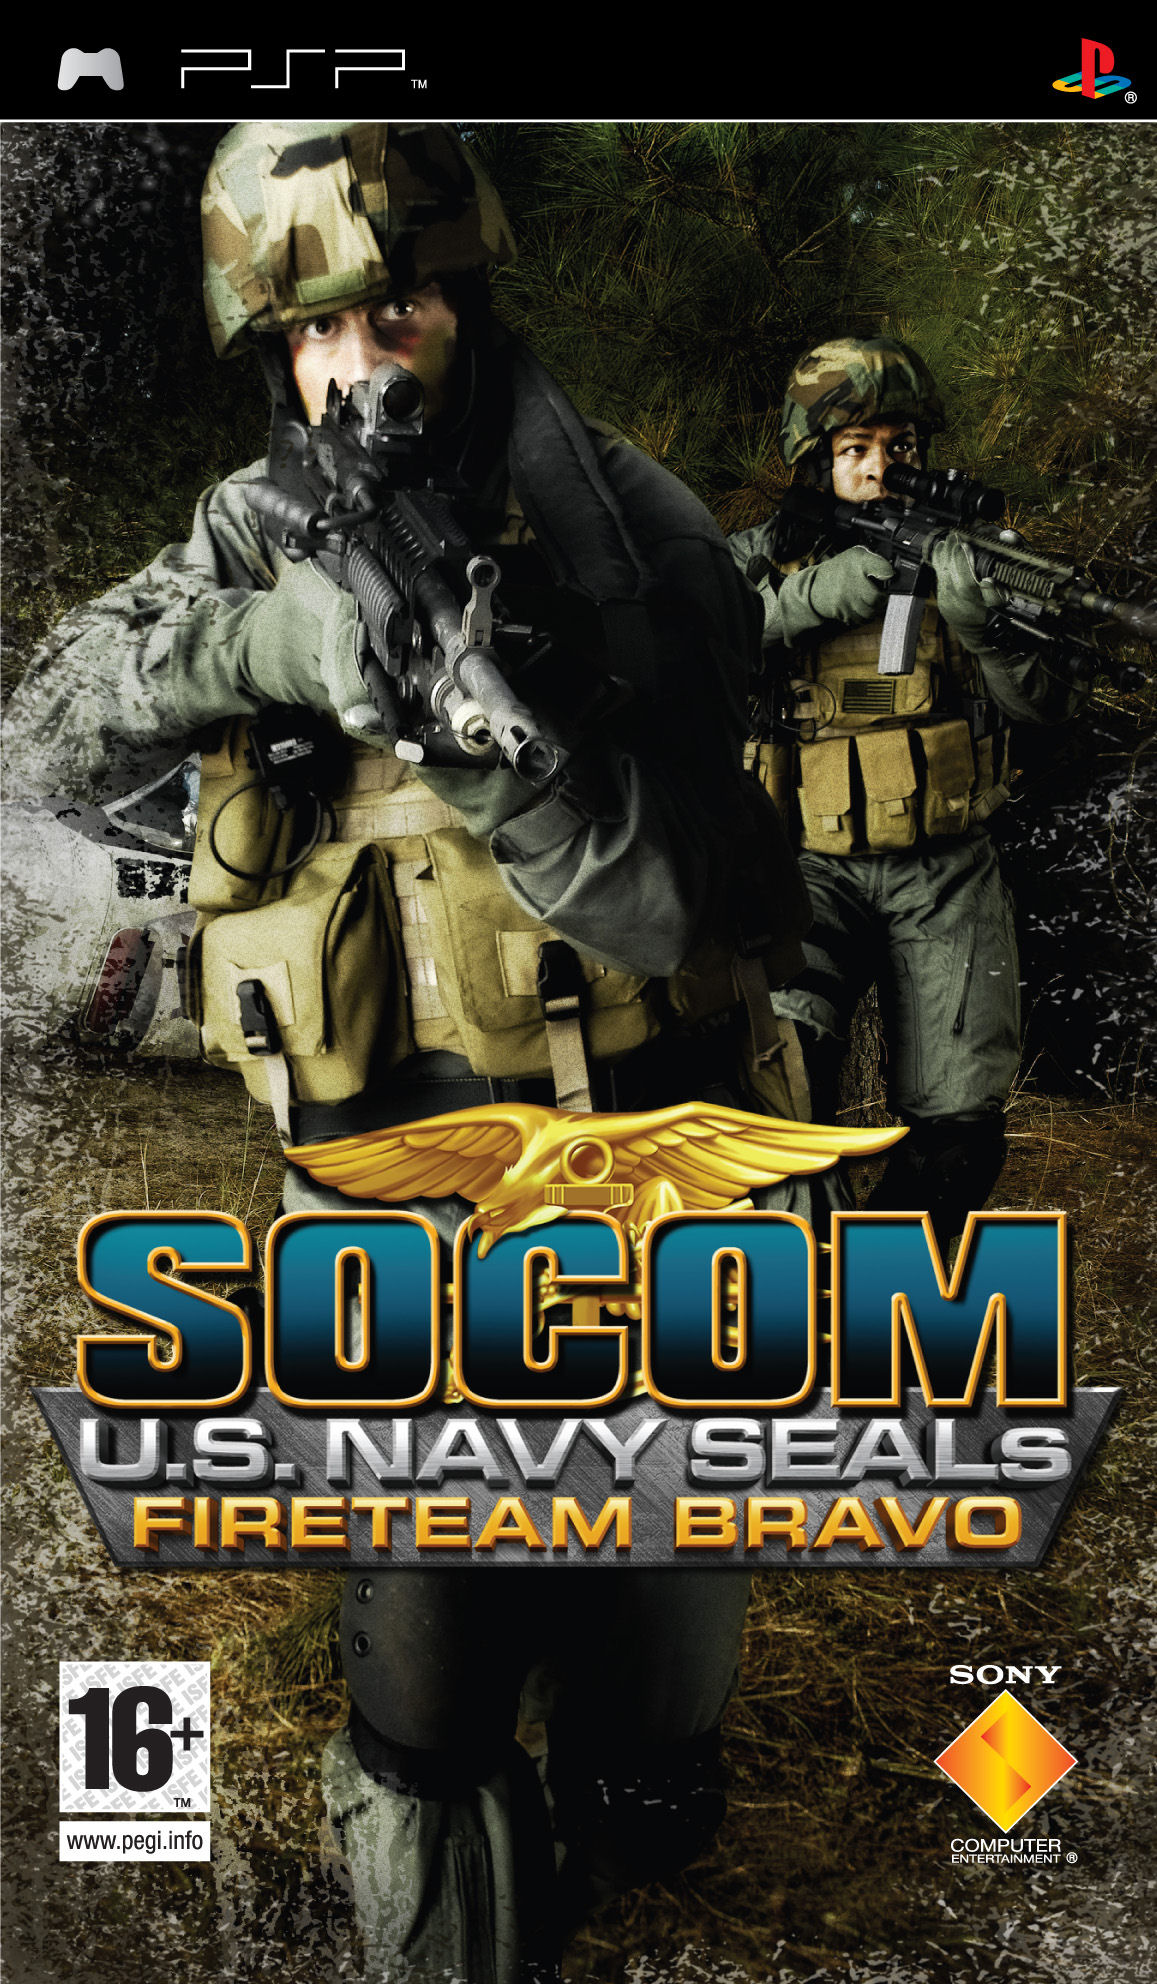 SOCOM: U.S. Navy SEALs: Fireteam Bravo • PSP